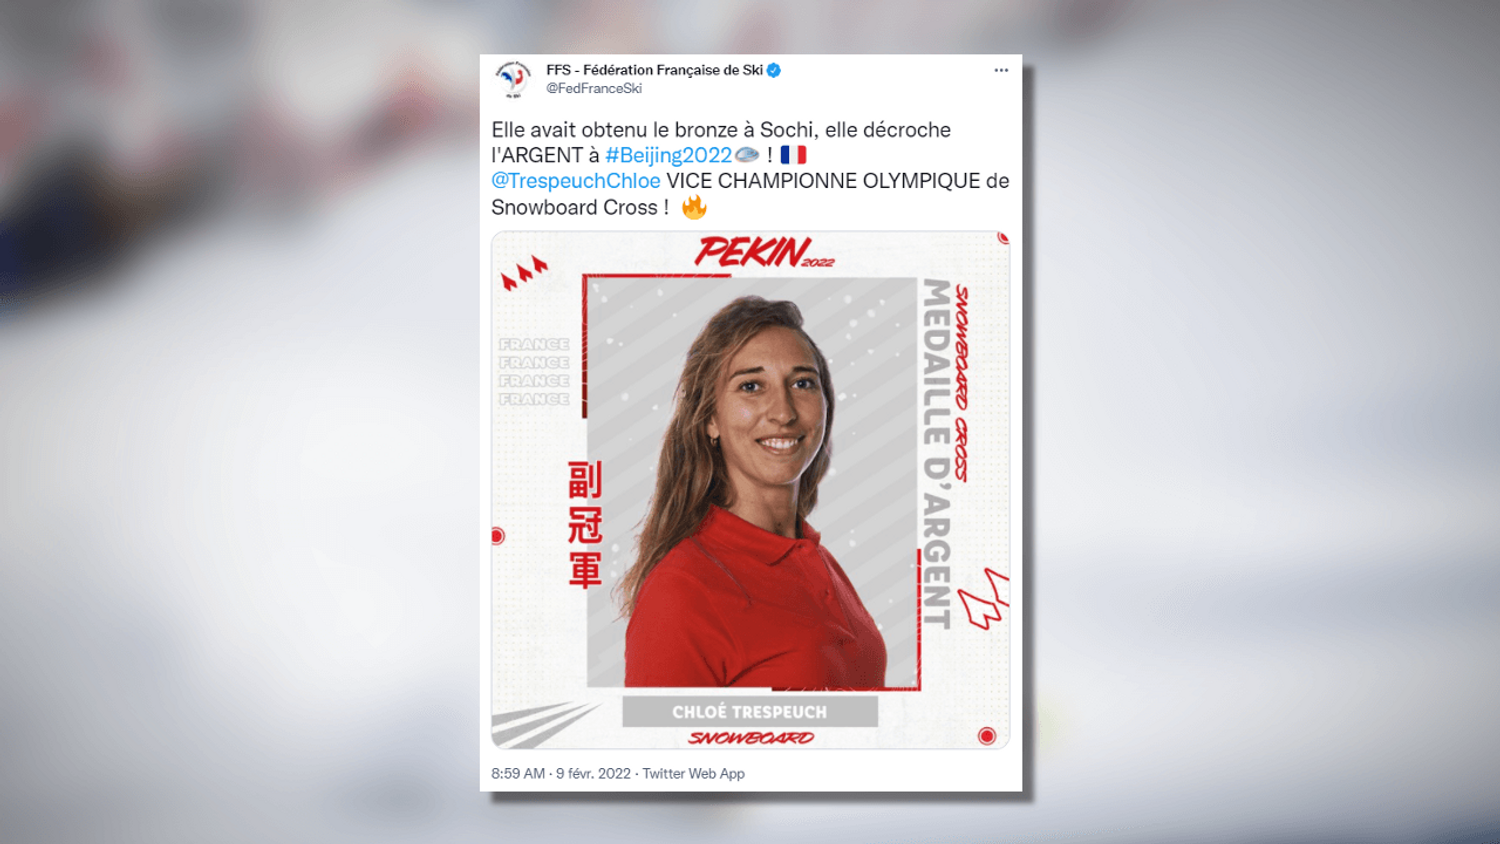 JO-2022 : Chloé Trespeuch prend l'argent en snowboardcross